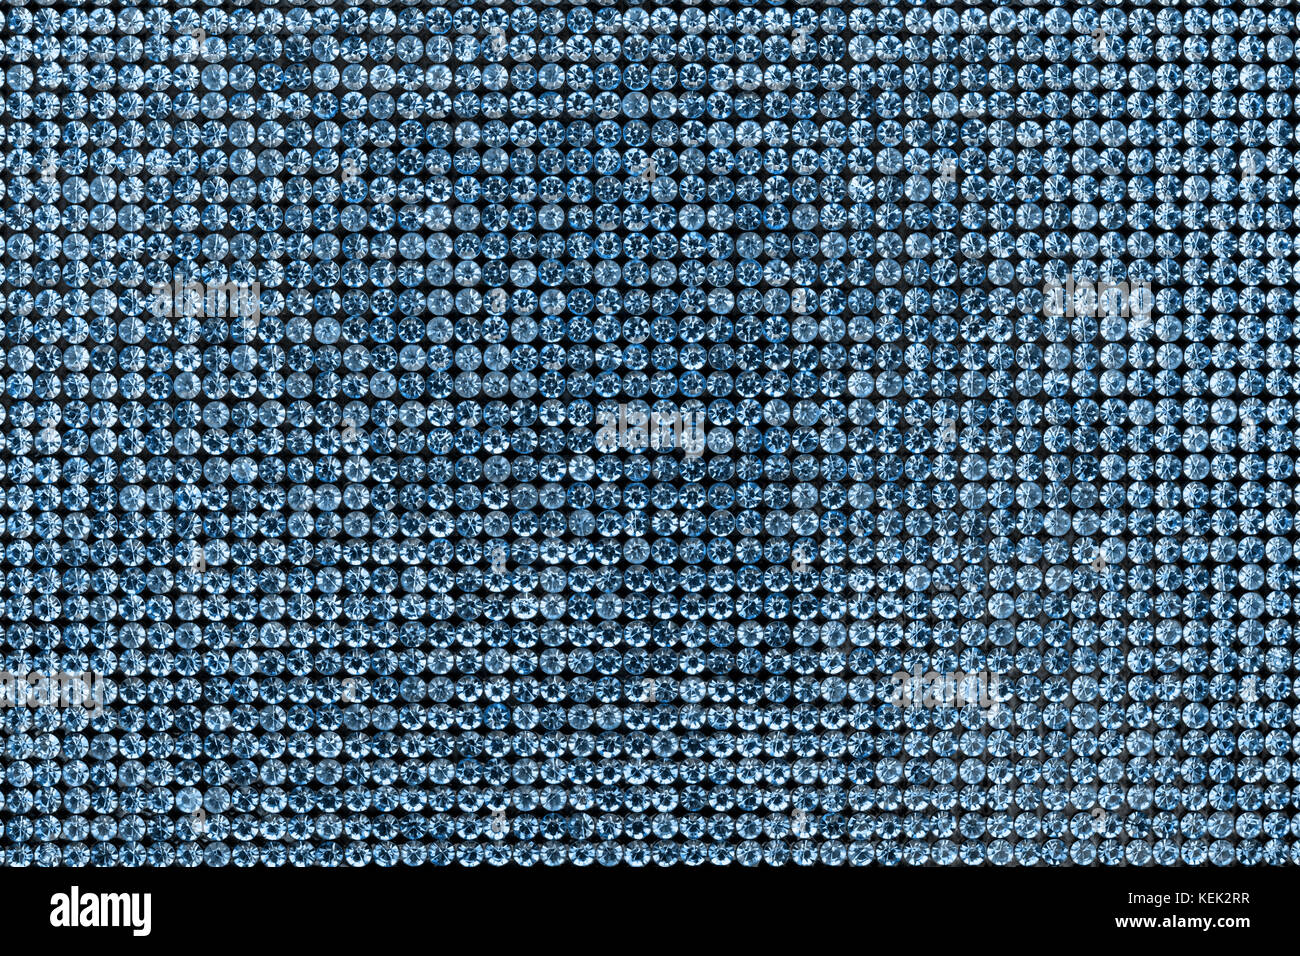 Canvas of Blue rhinestones. Background Stock Photo - Alamy